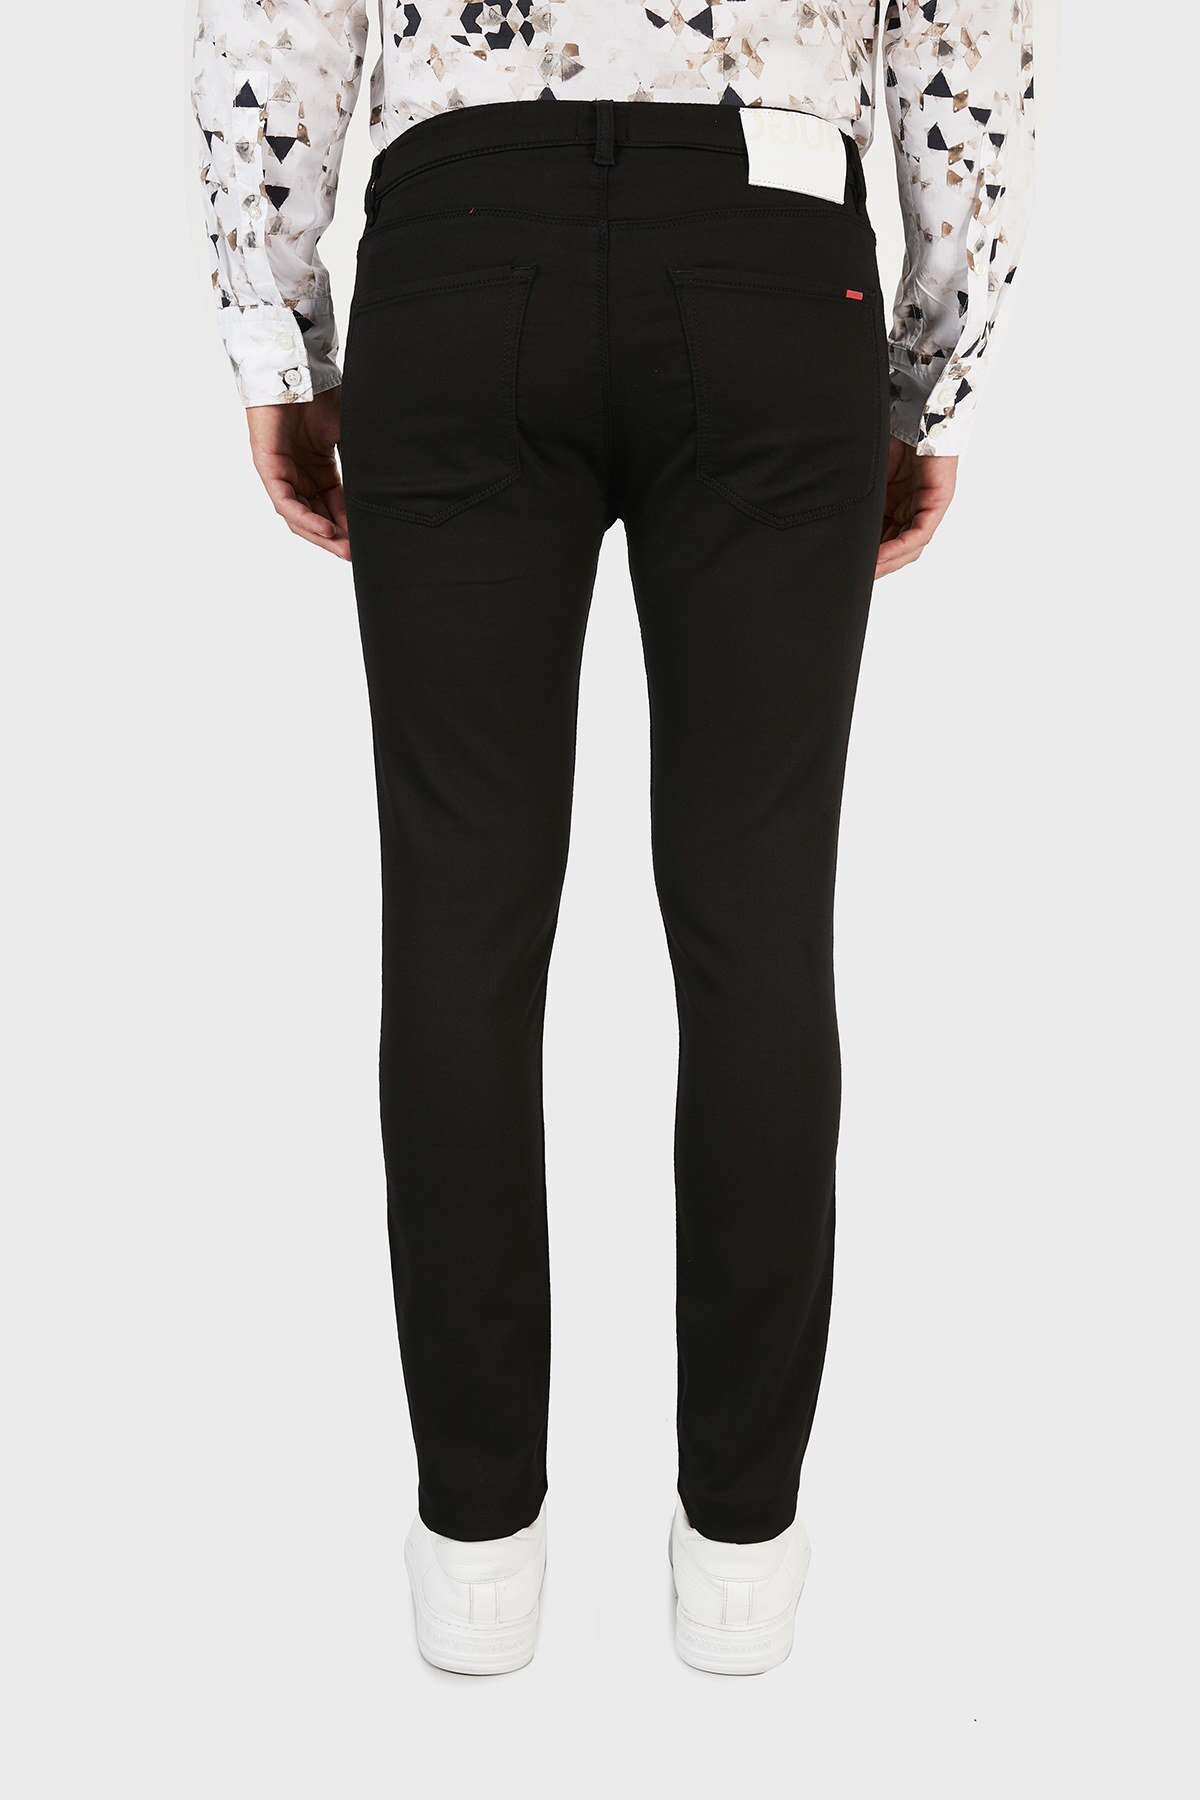 Hugo Boss Extra Slim Fit Cepli Pamuklu Jeans Erkek Kot Pantolon 50453502 001 SİYAH